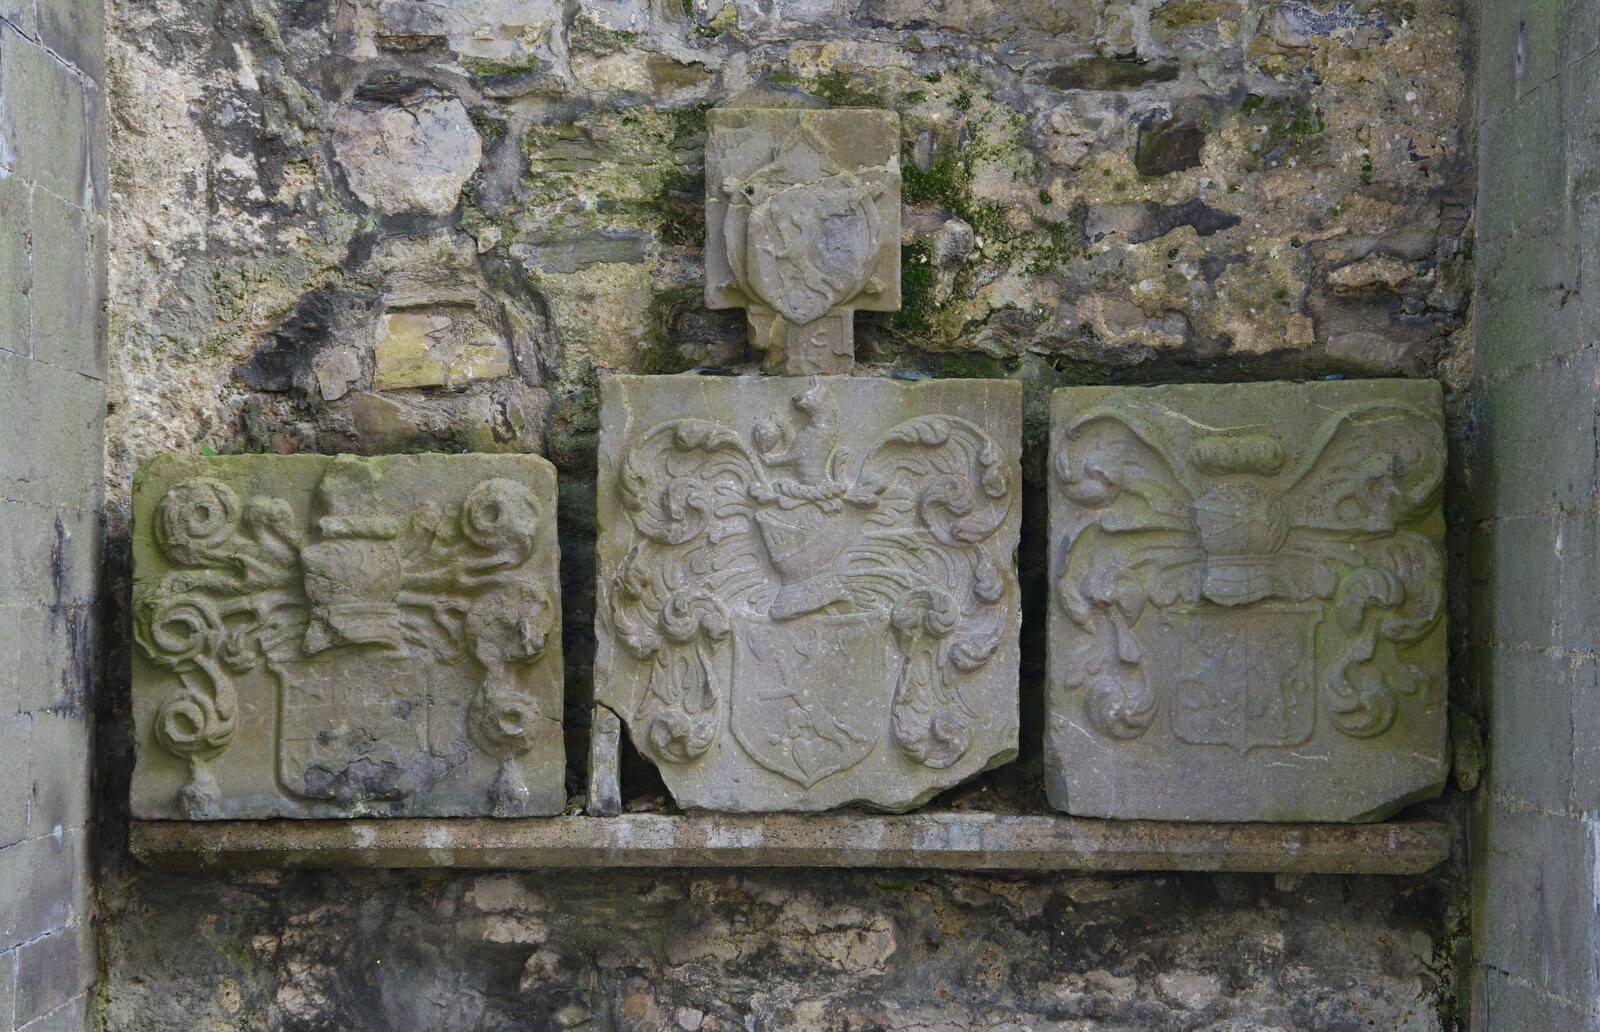 More stone carvings in Sligo Abbey from Florence Court and a Postcard from Sligo, Fermanagh and Sligo, Ireland - 21st August 2019